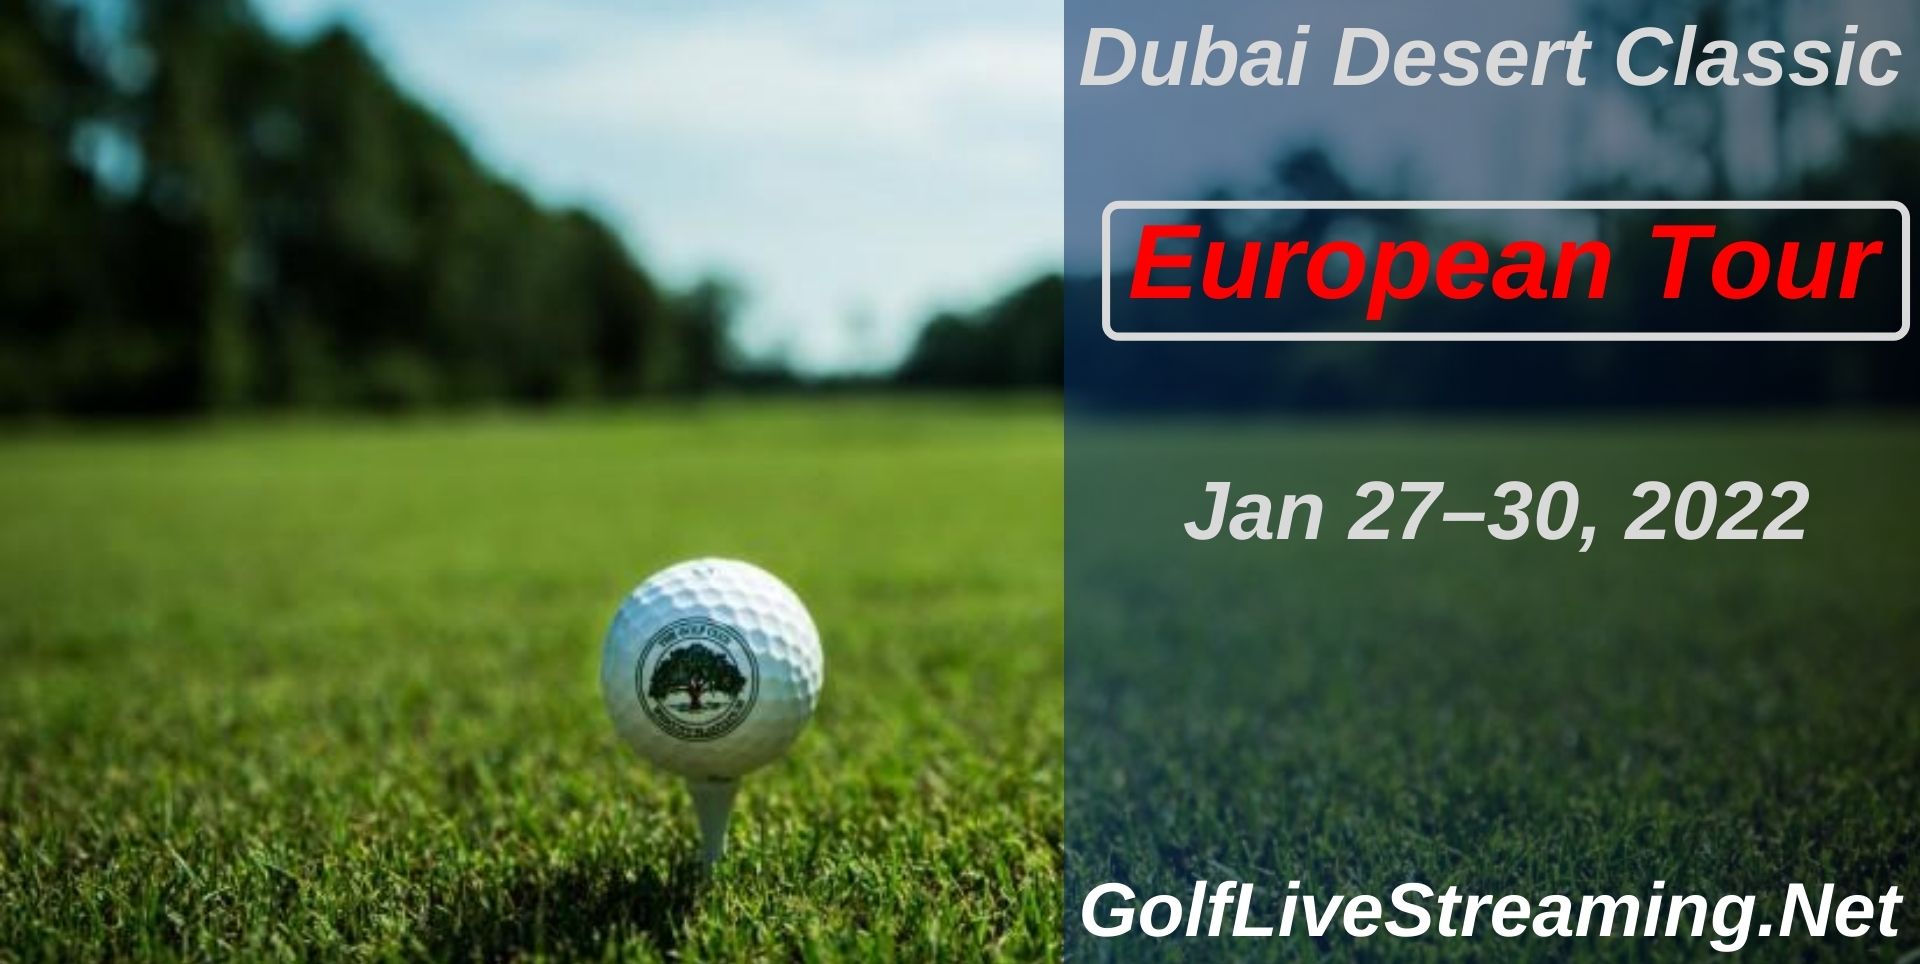 Dubai Desert Classic Rd 3 Live Stream 2022 | European Tour slider